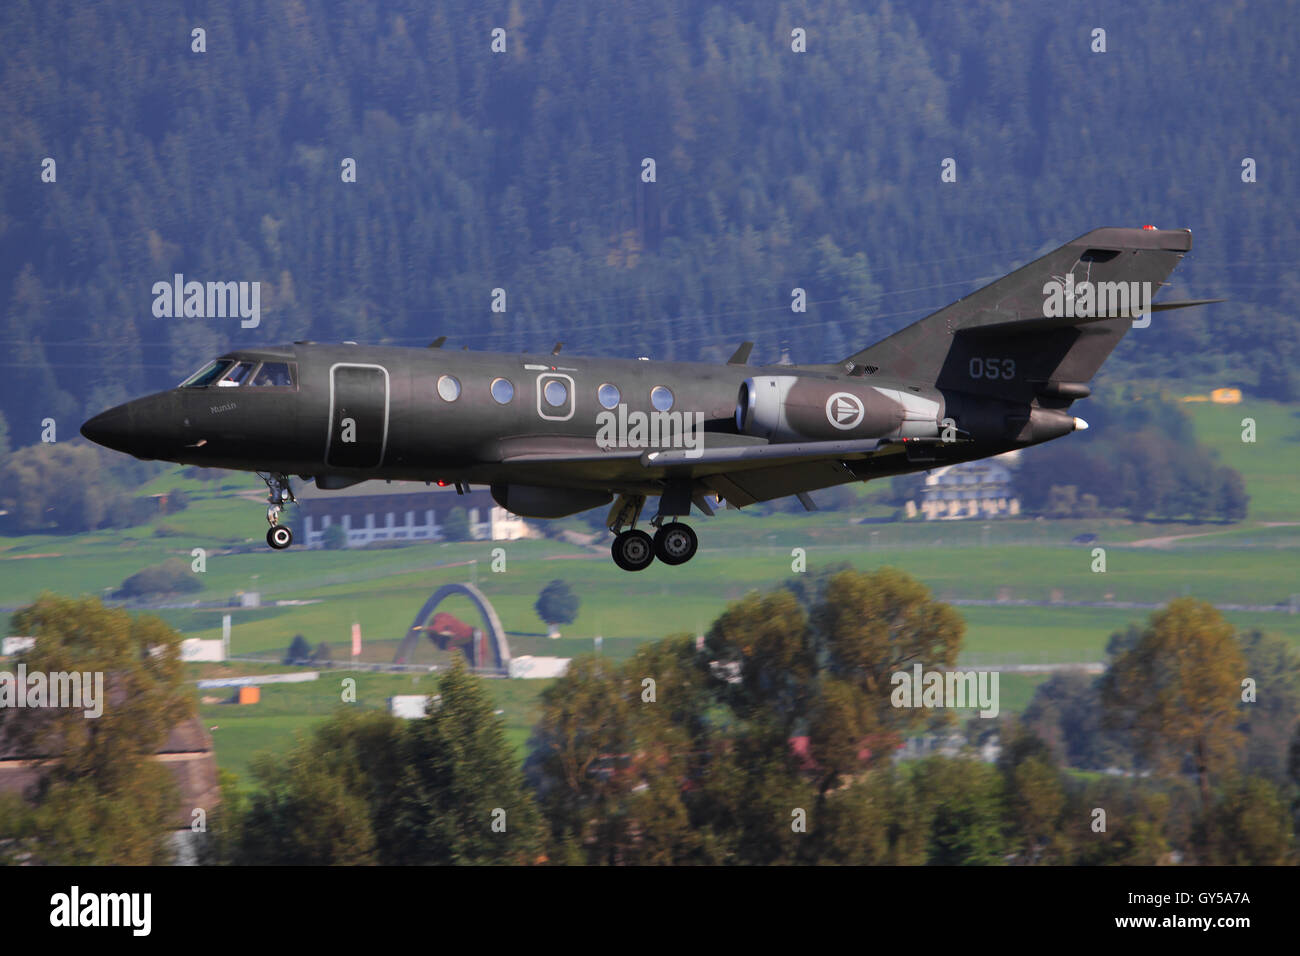 SLIAC, SLOVAKIA - AUGUST 30: dassault F20 at SIAF airshow in Sliac, Slovakia Stock Photo